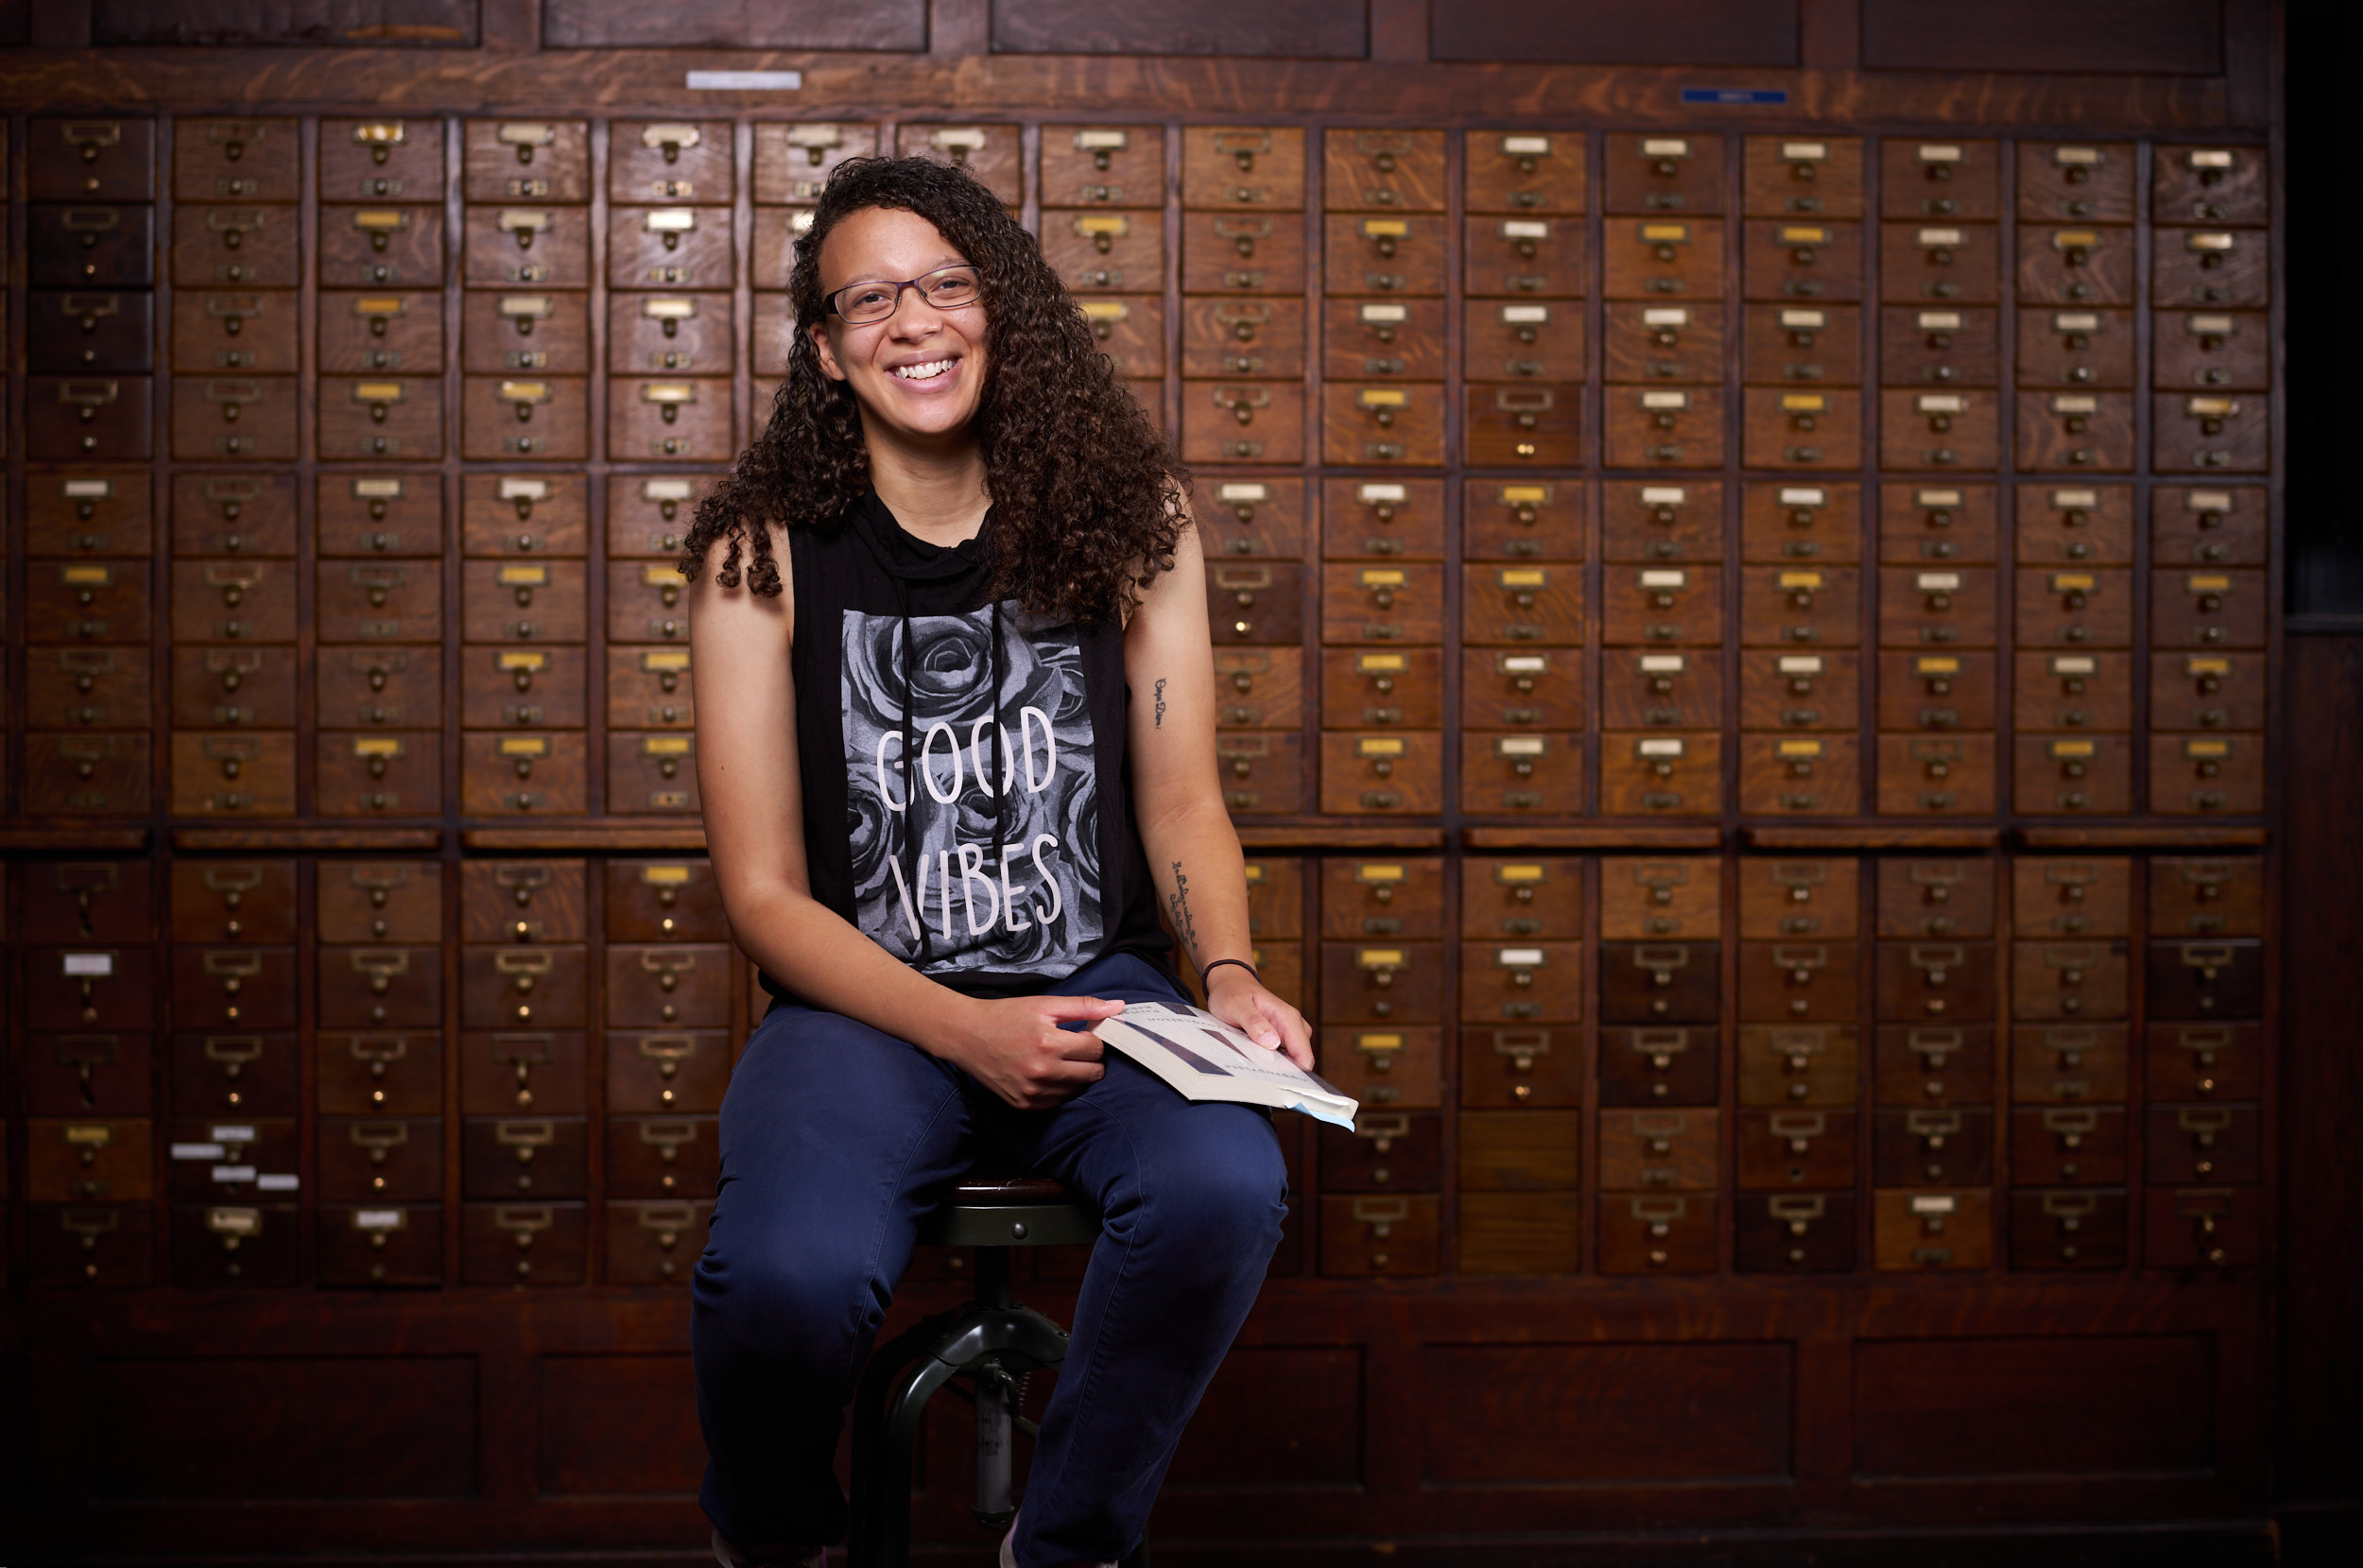 portrait of diversity student in college smiling professional portrait shoot indoors